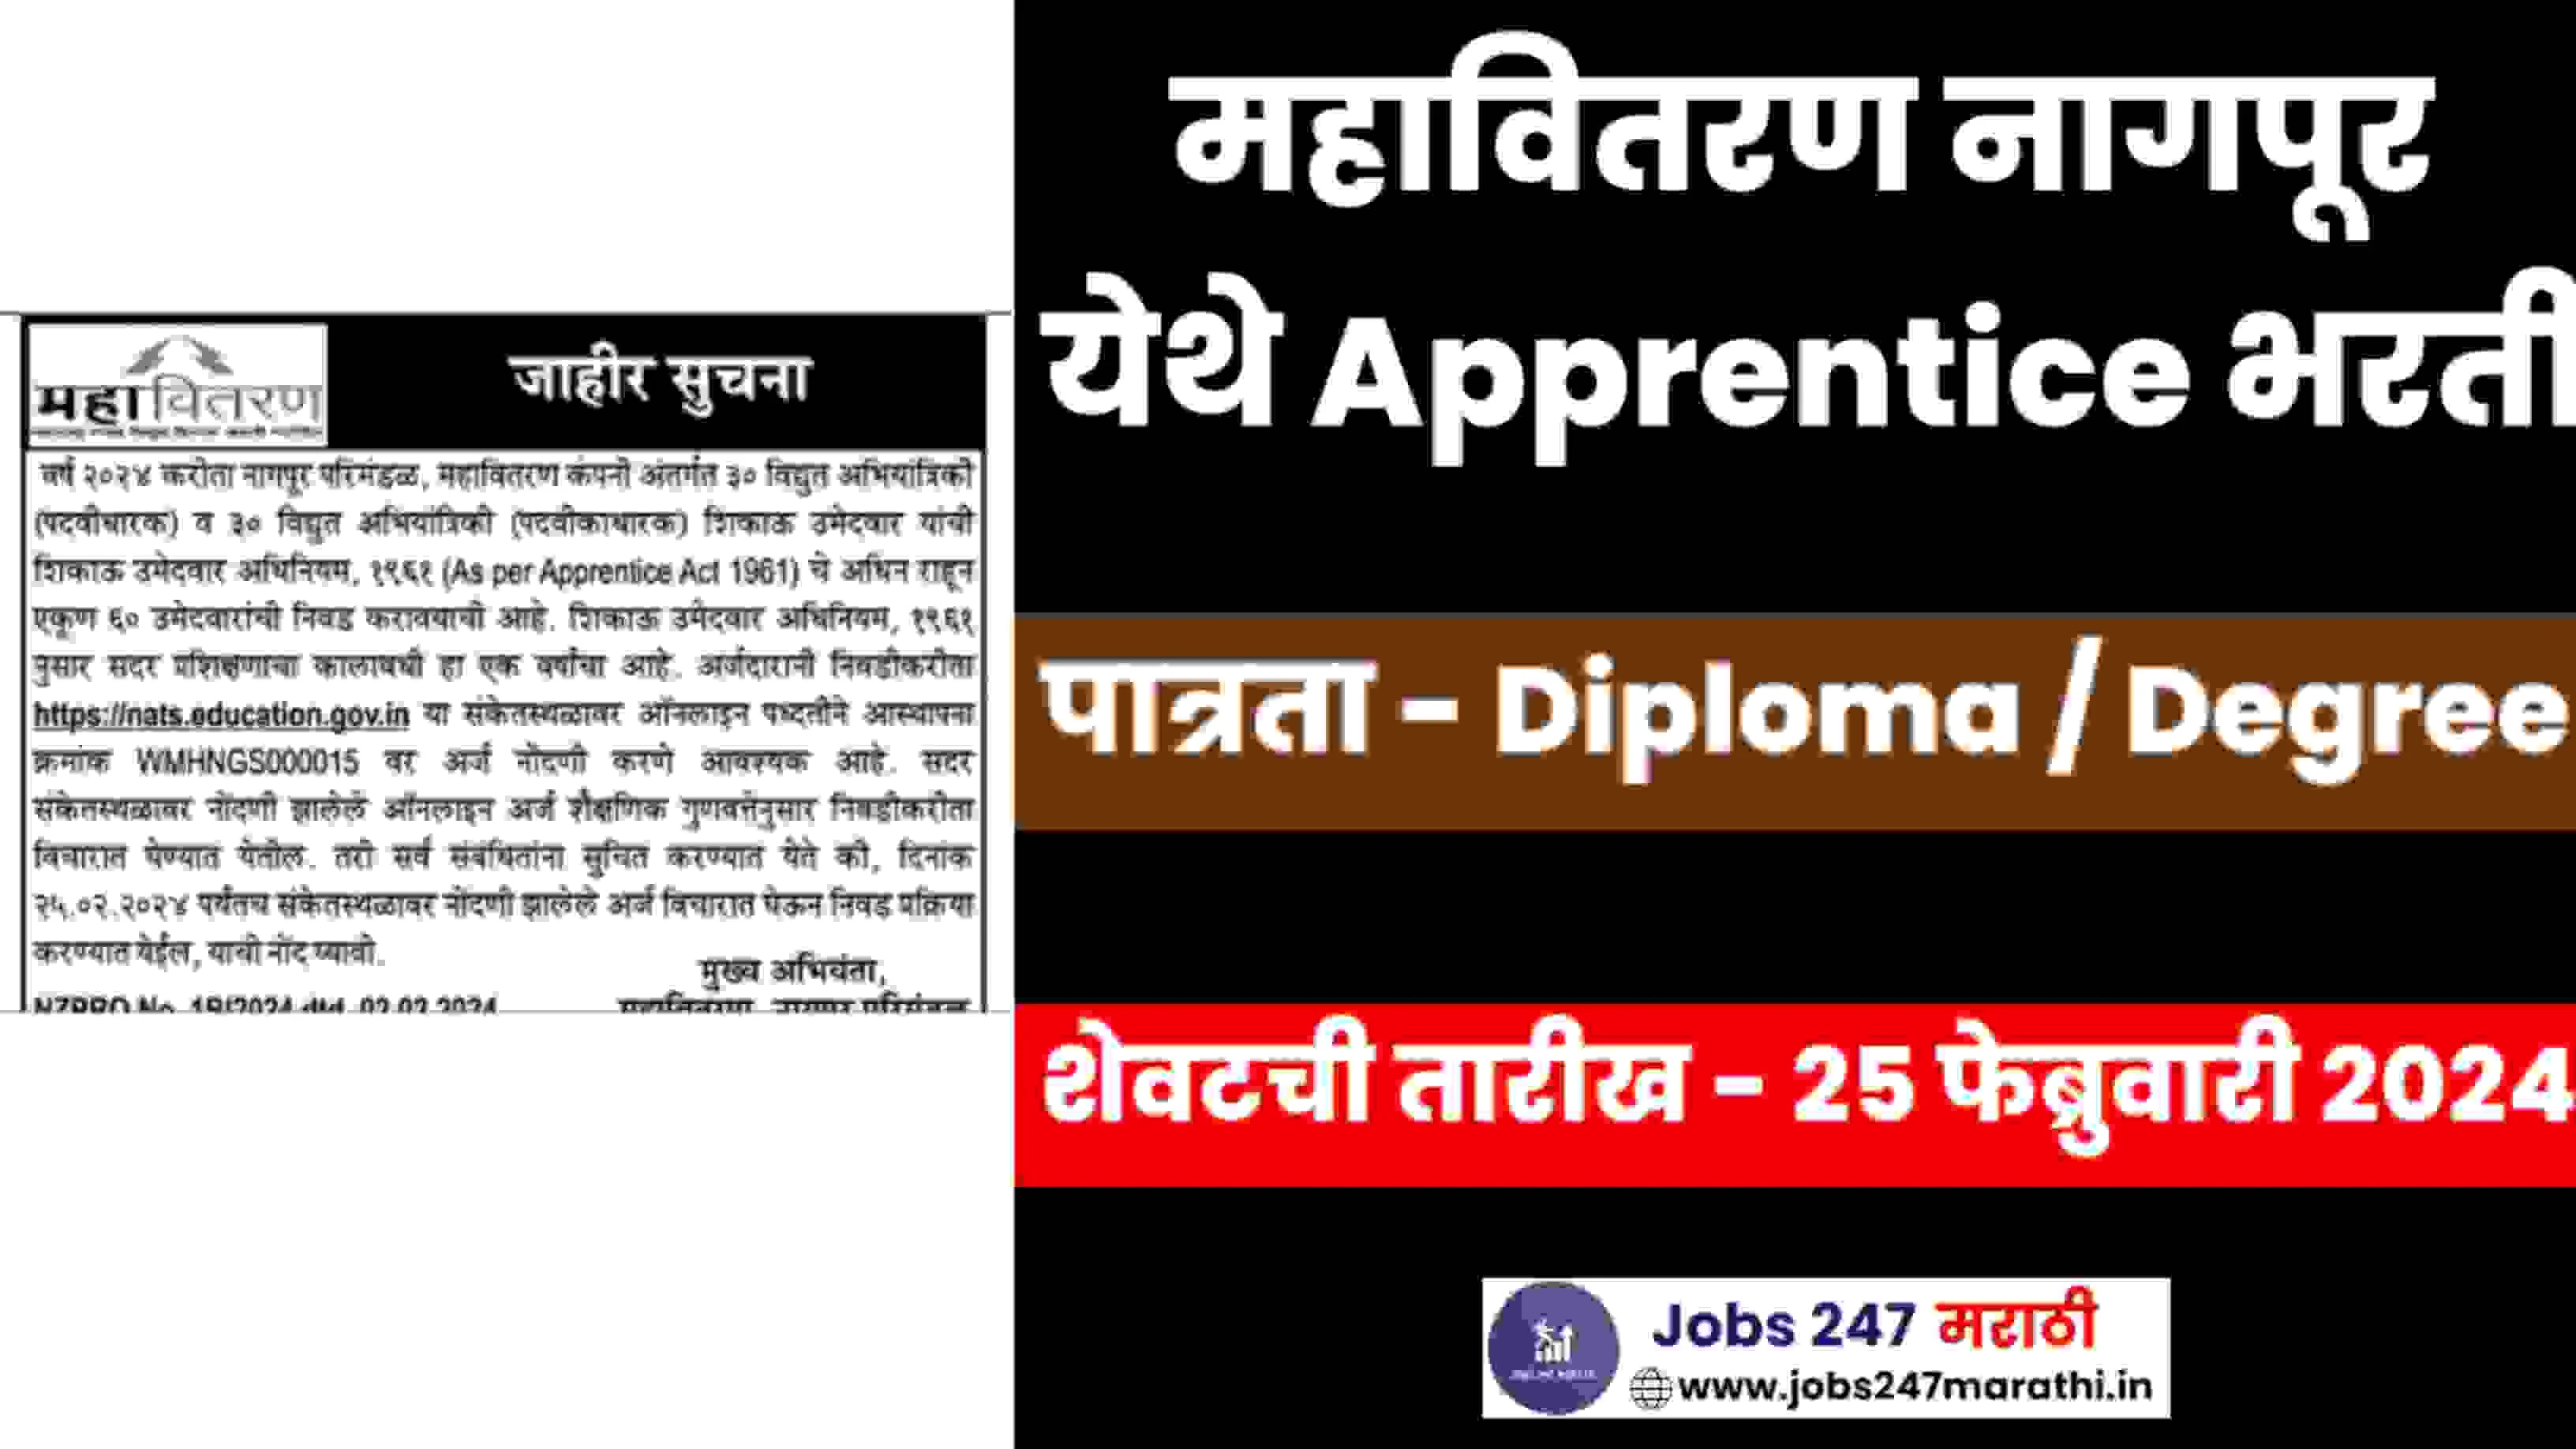 Mahavitaran Nagpur Degree / Diploma Apprentice Recruitment 2024